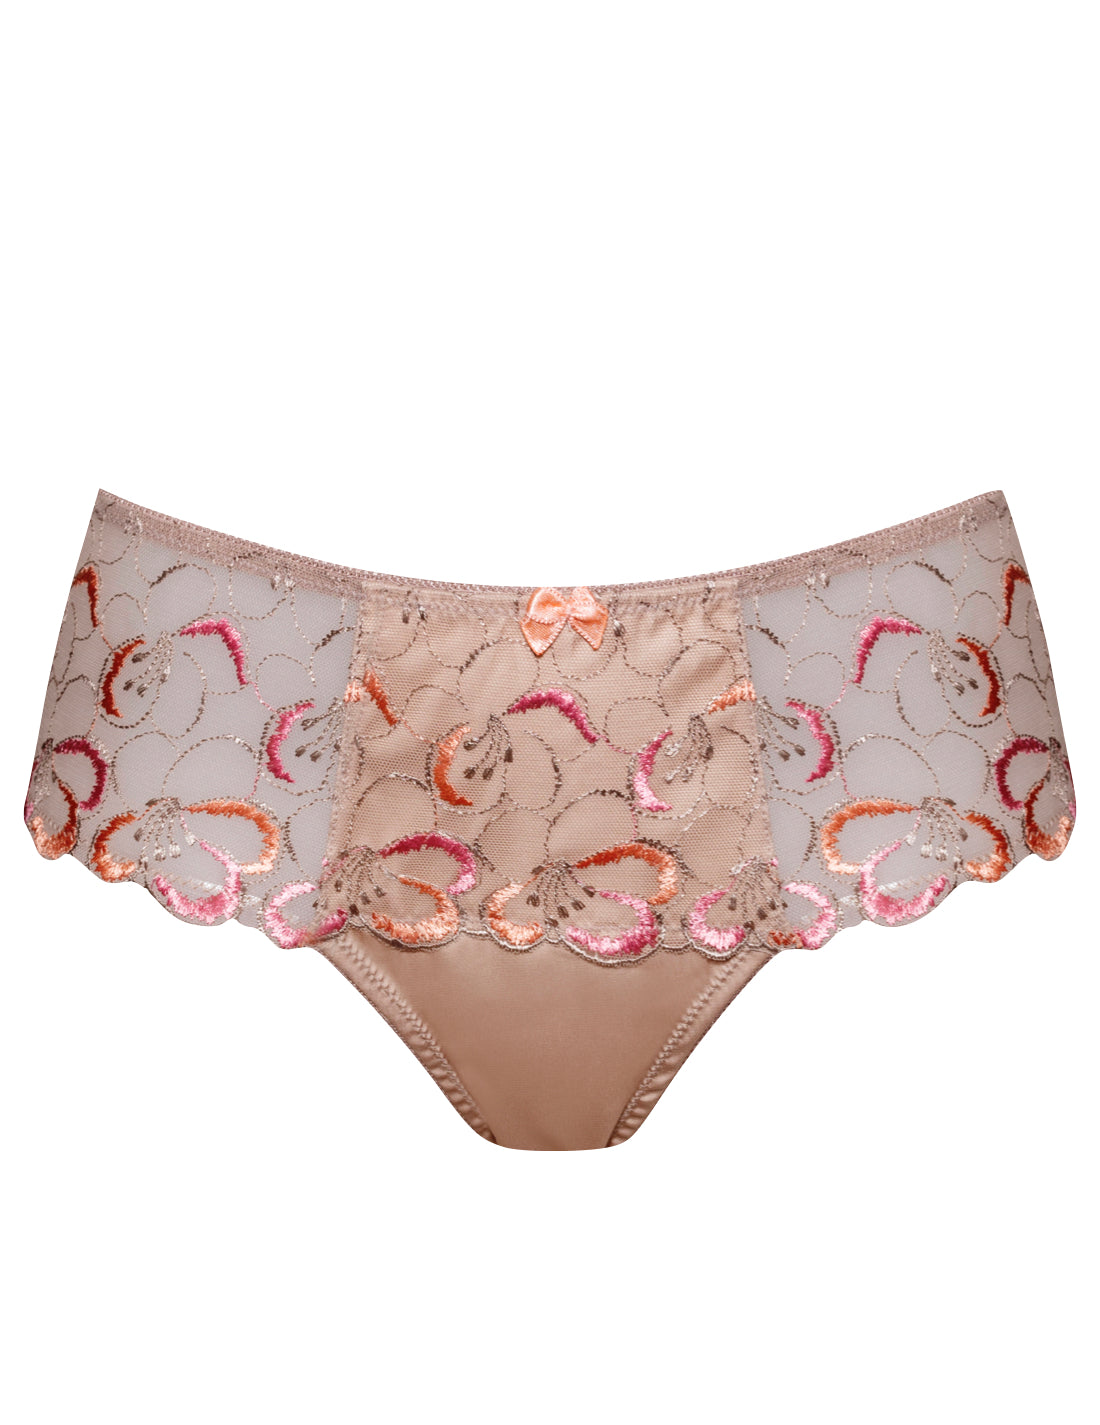 Knickers  Luxury & Sexy Designer Knickers & Women's Panties - Mimi Holliday